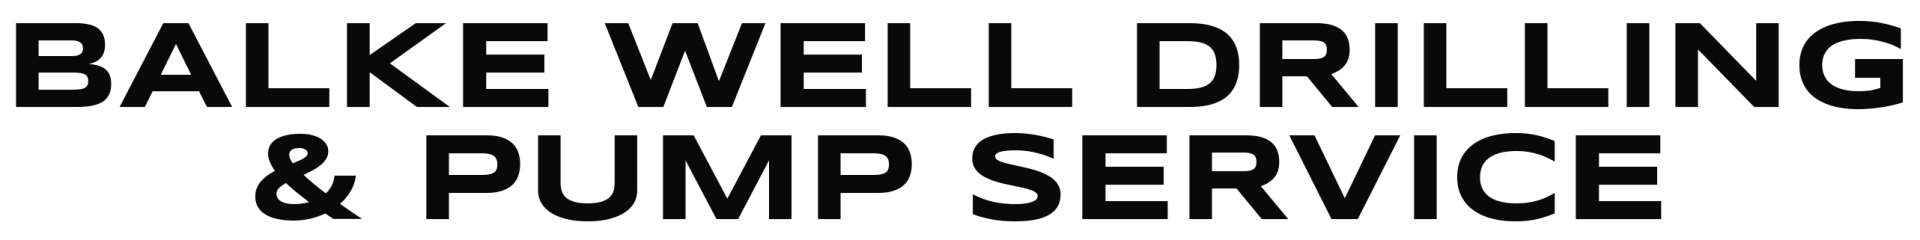 Balke well drilling & Pump Service - logo